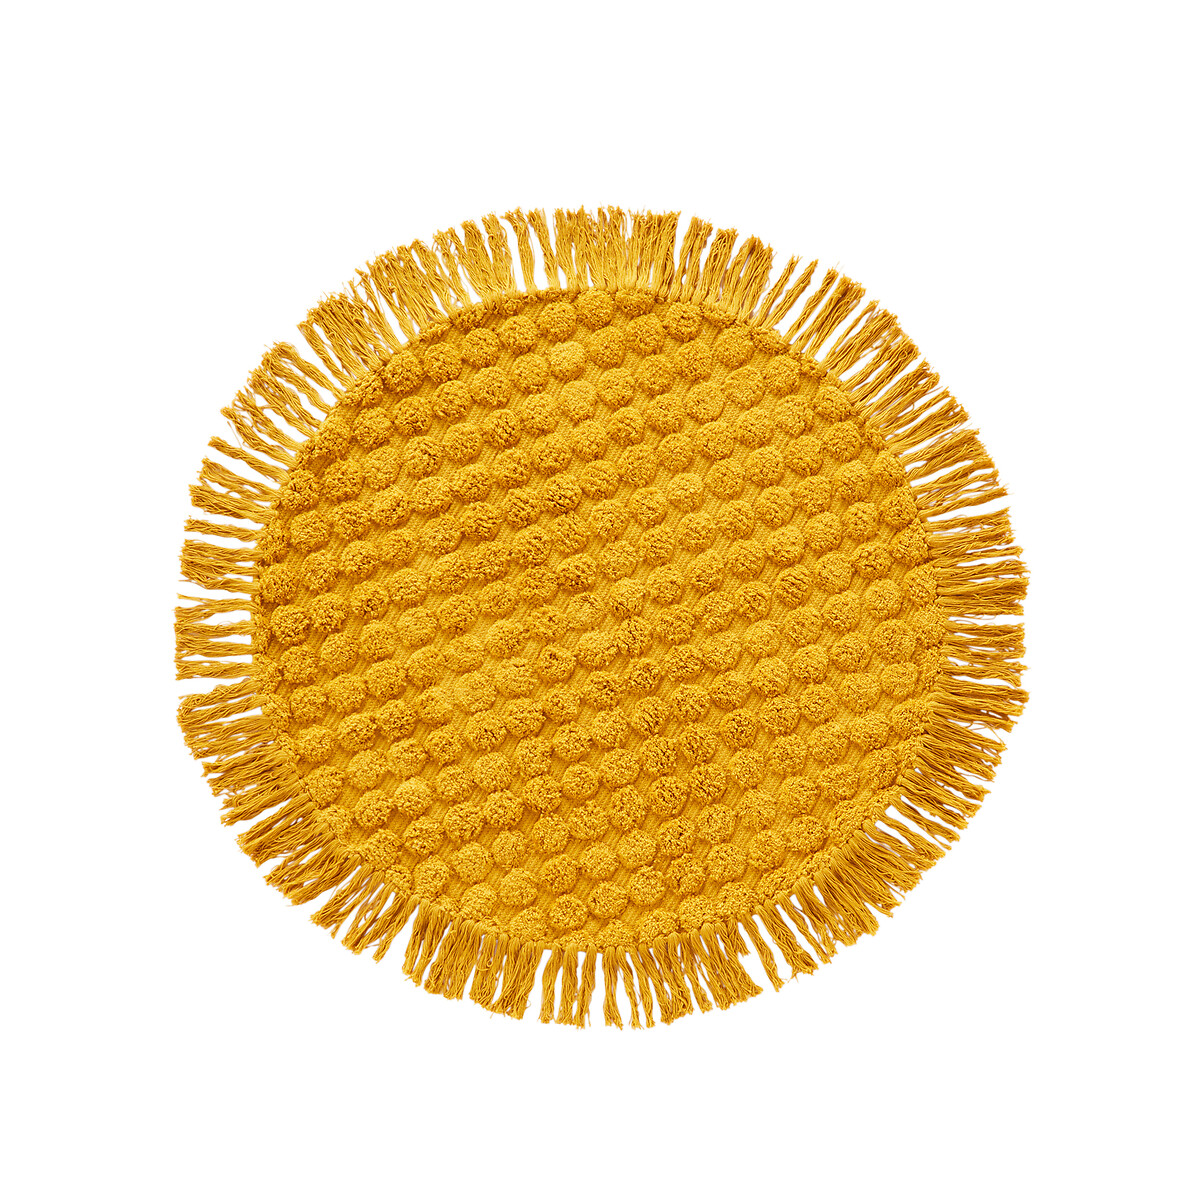 Коврик LaRedoute Детский из биохлопка Pundana диаметр 120 см желтый, размер диаметр 120 см - фото 1